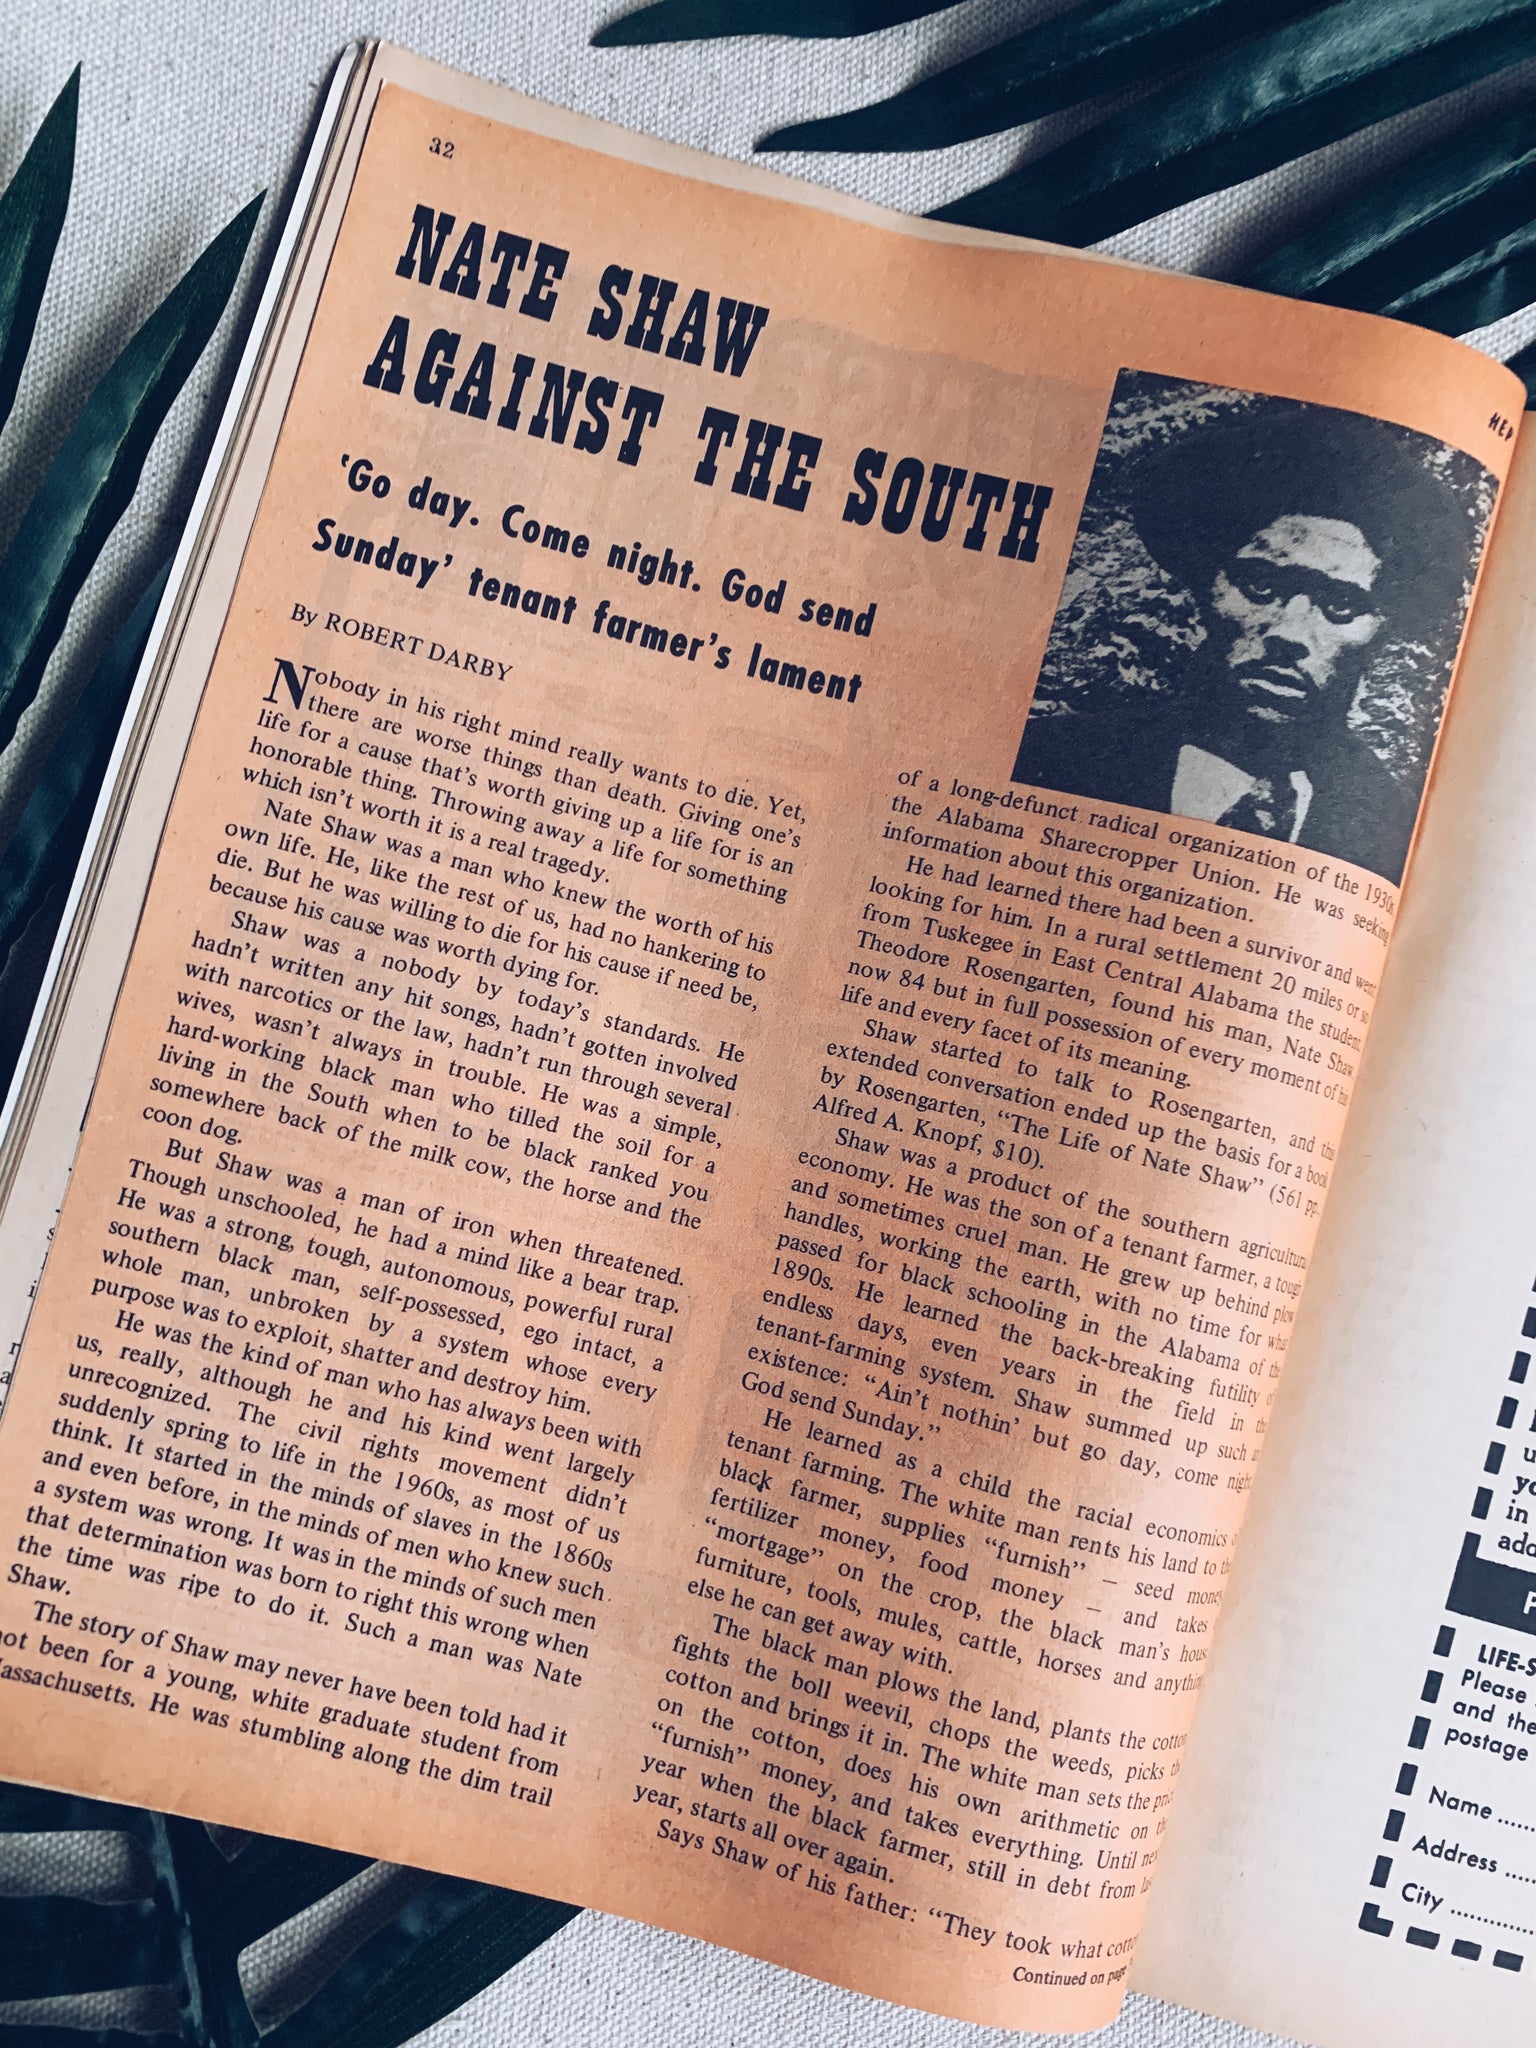 Vintage Hep Magazine // "Crime & The Black Man" Cover Story (1975)